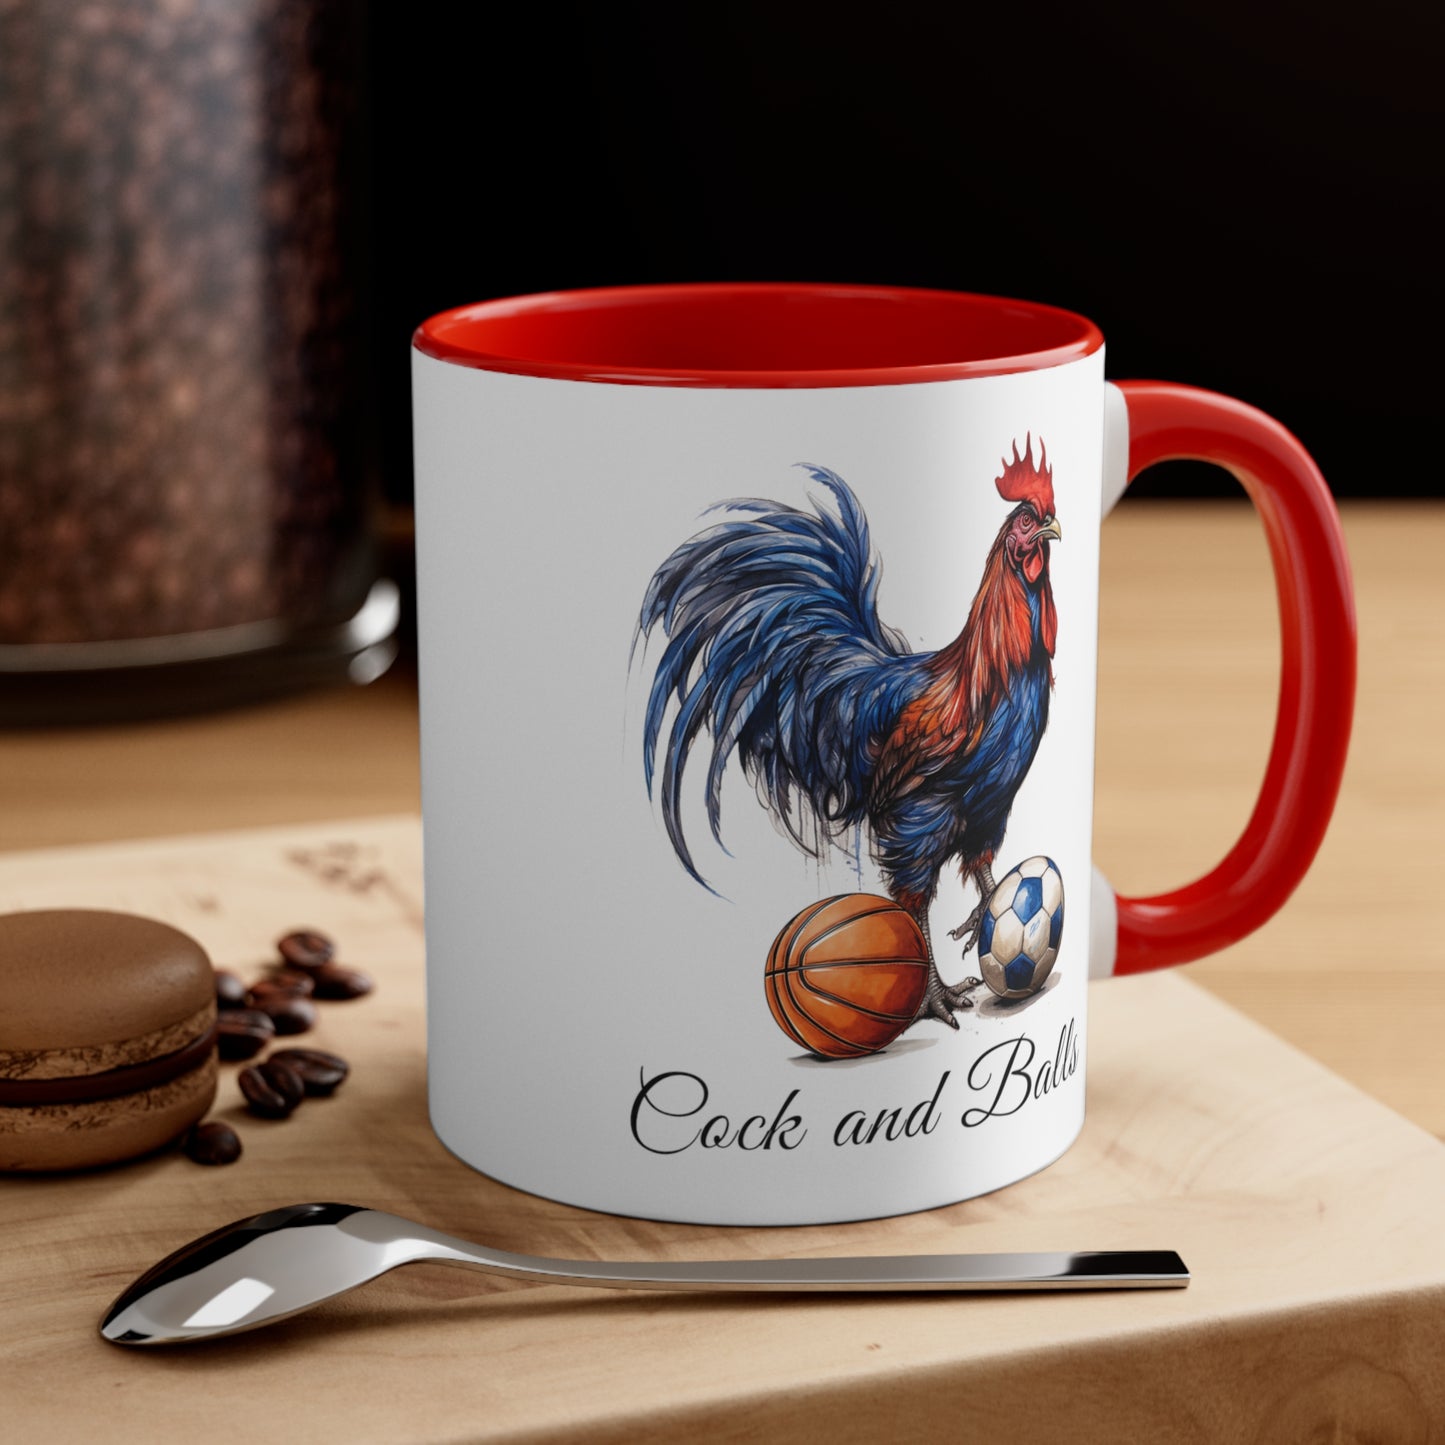 Cock and Balls novelty/gift Ceramic Coffee Mug!